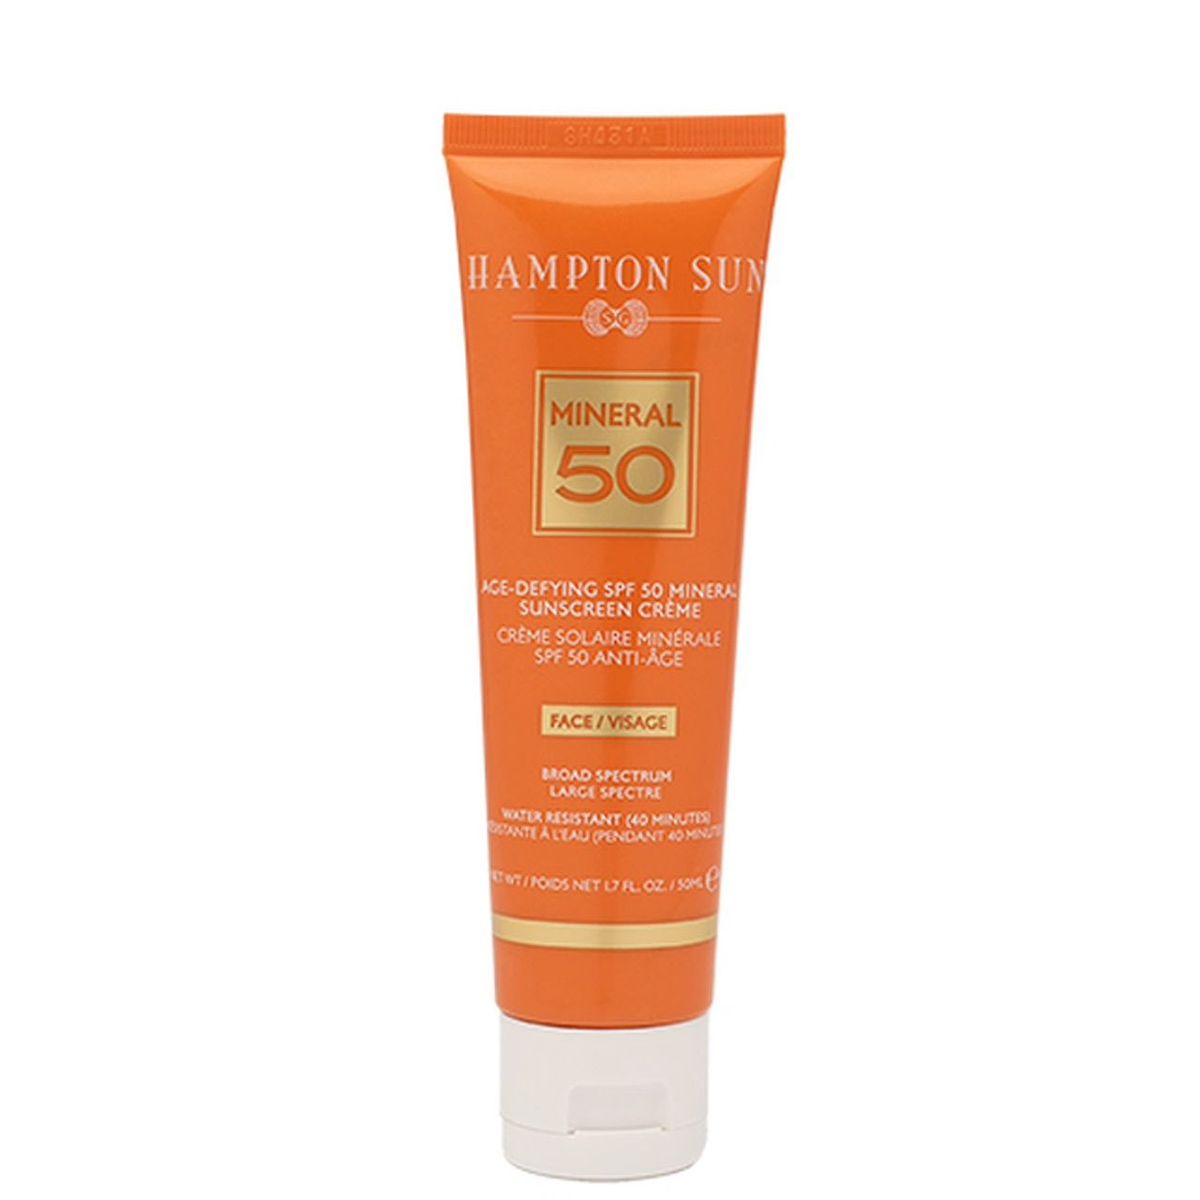 Hampton Sun Age-Defying SPF 50 Mineralcreme